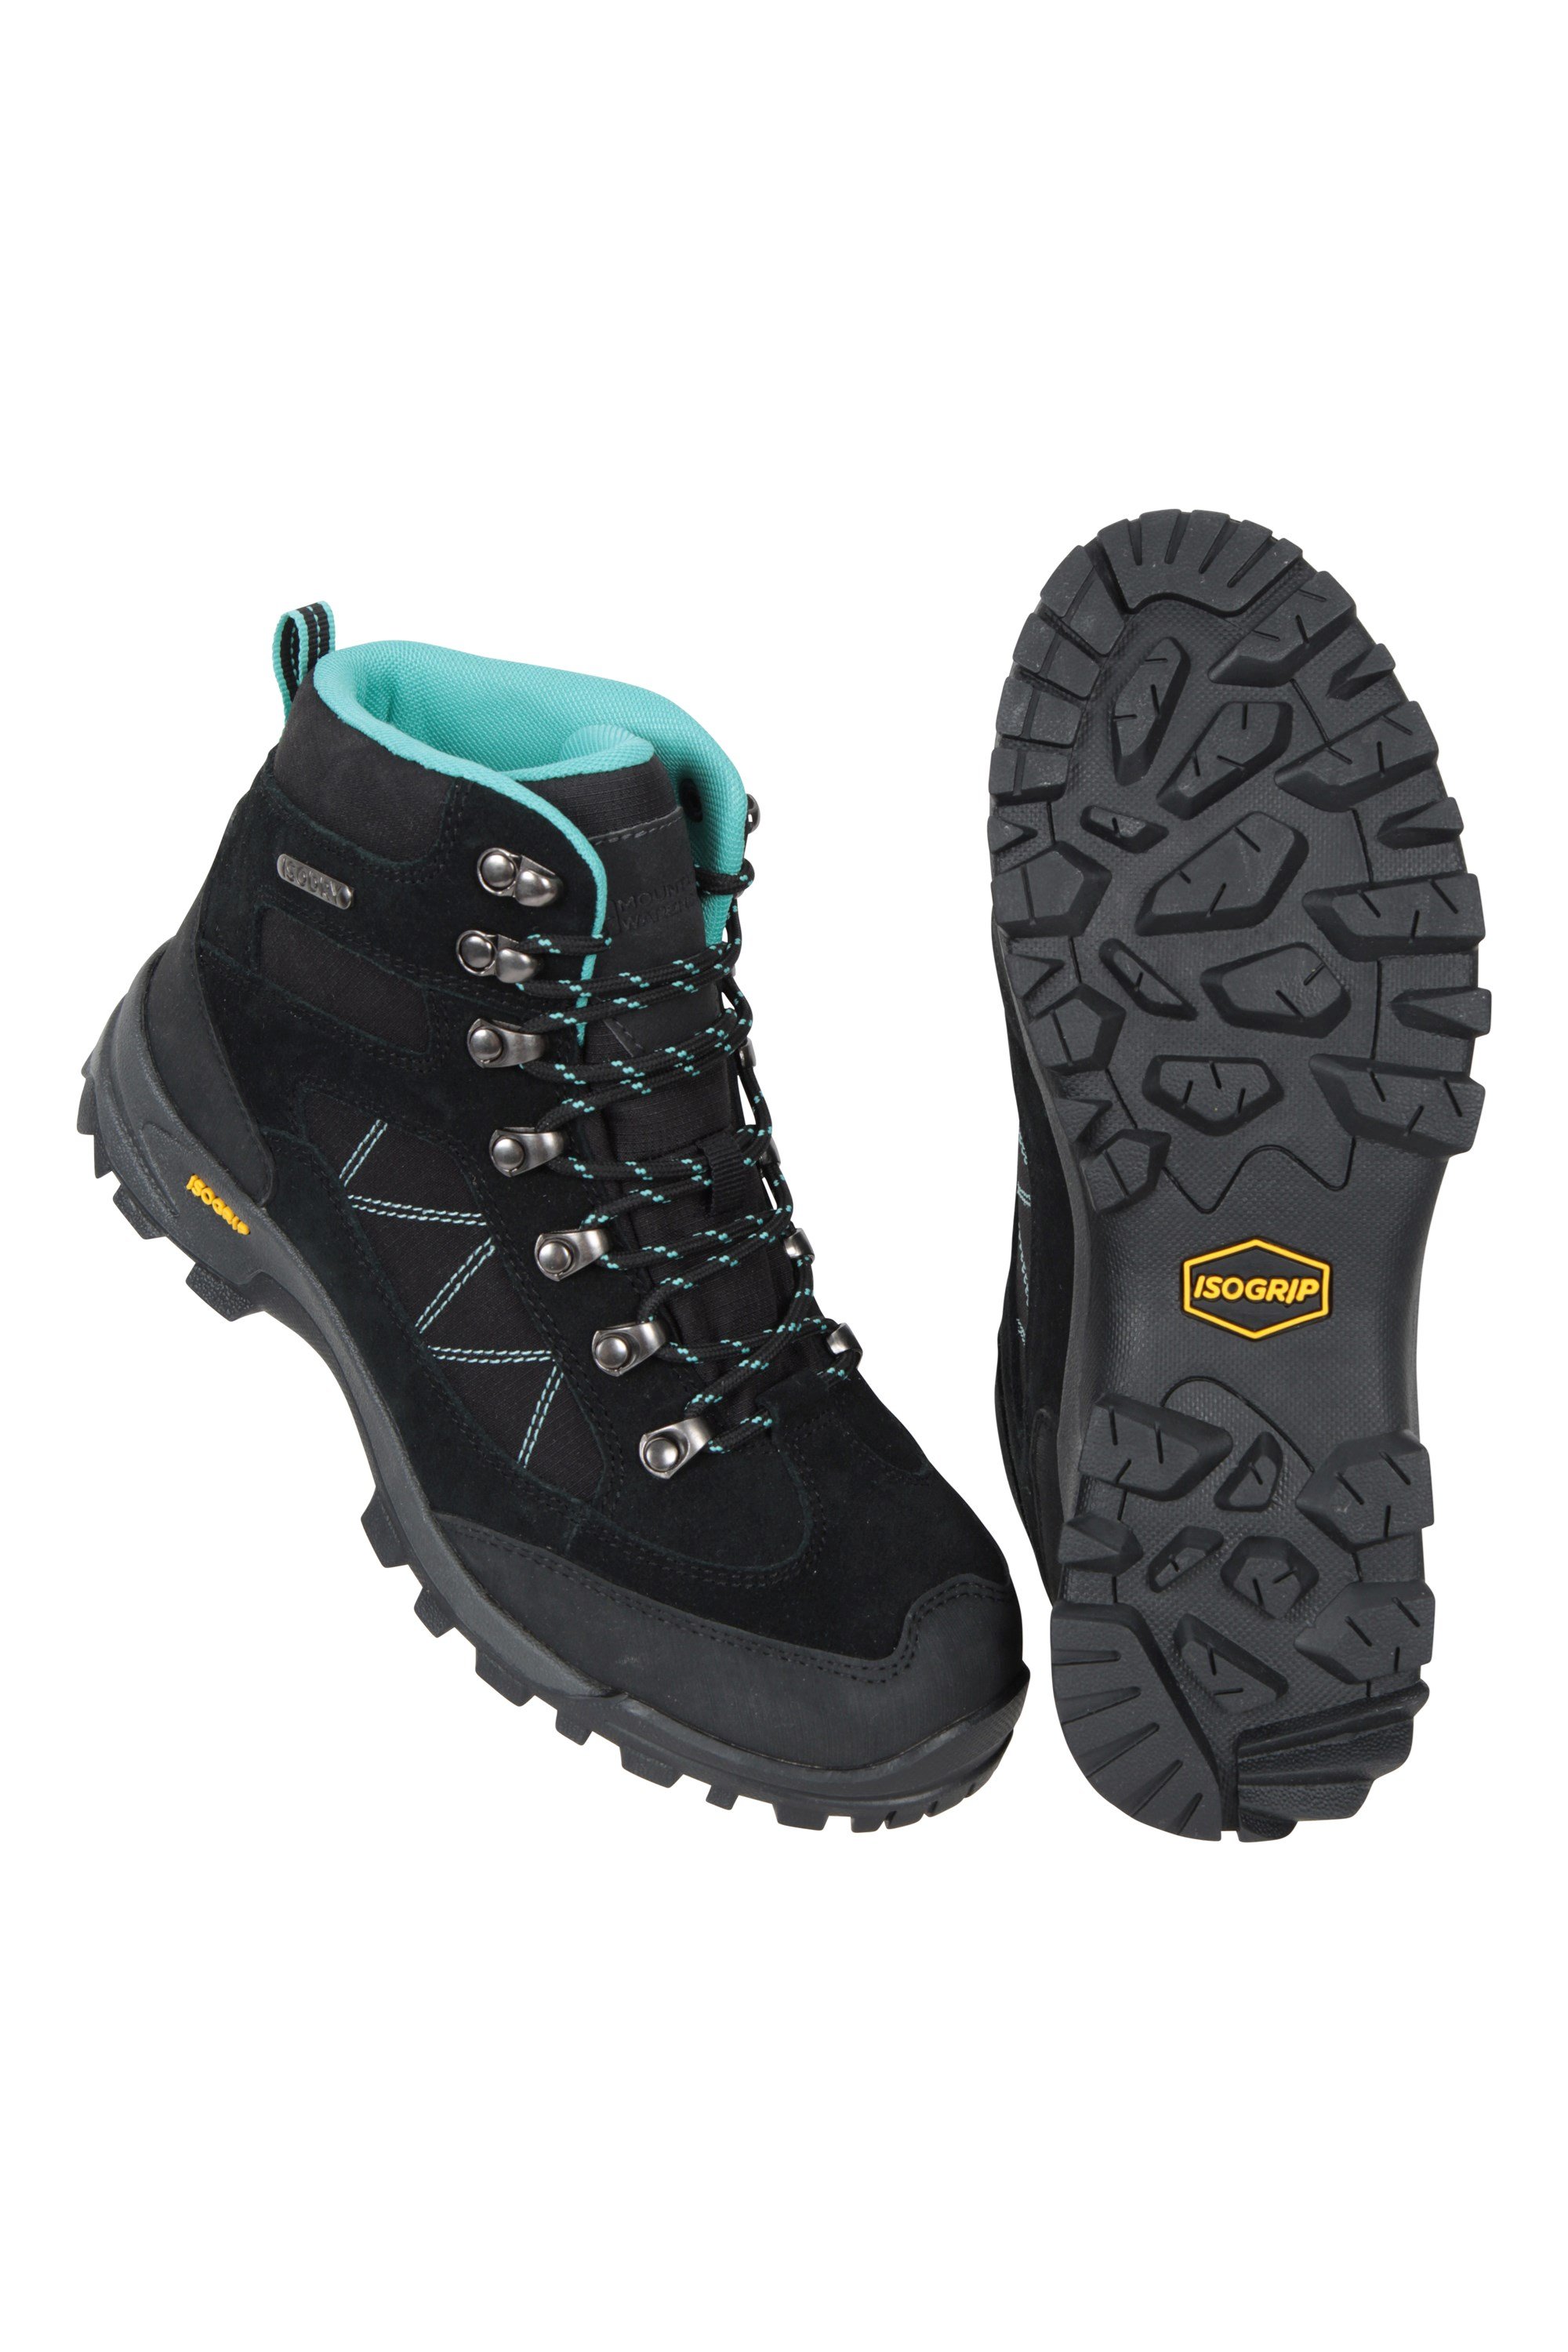 Storm Womens Isogrip Waterproof Hiking Boots - Black